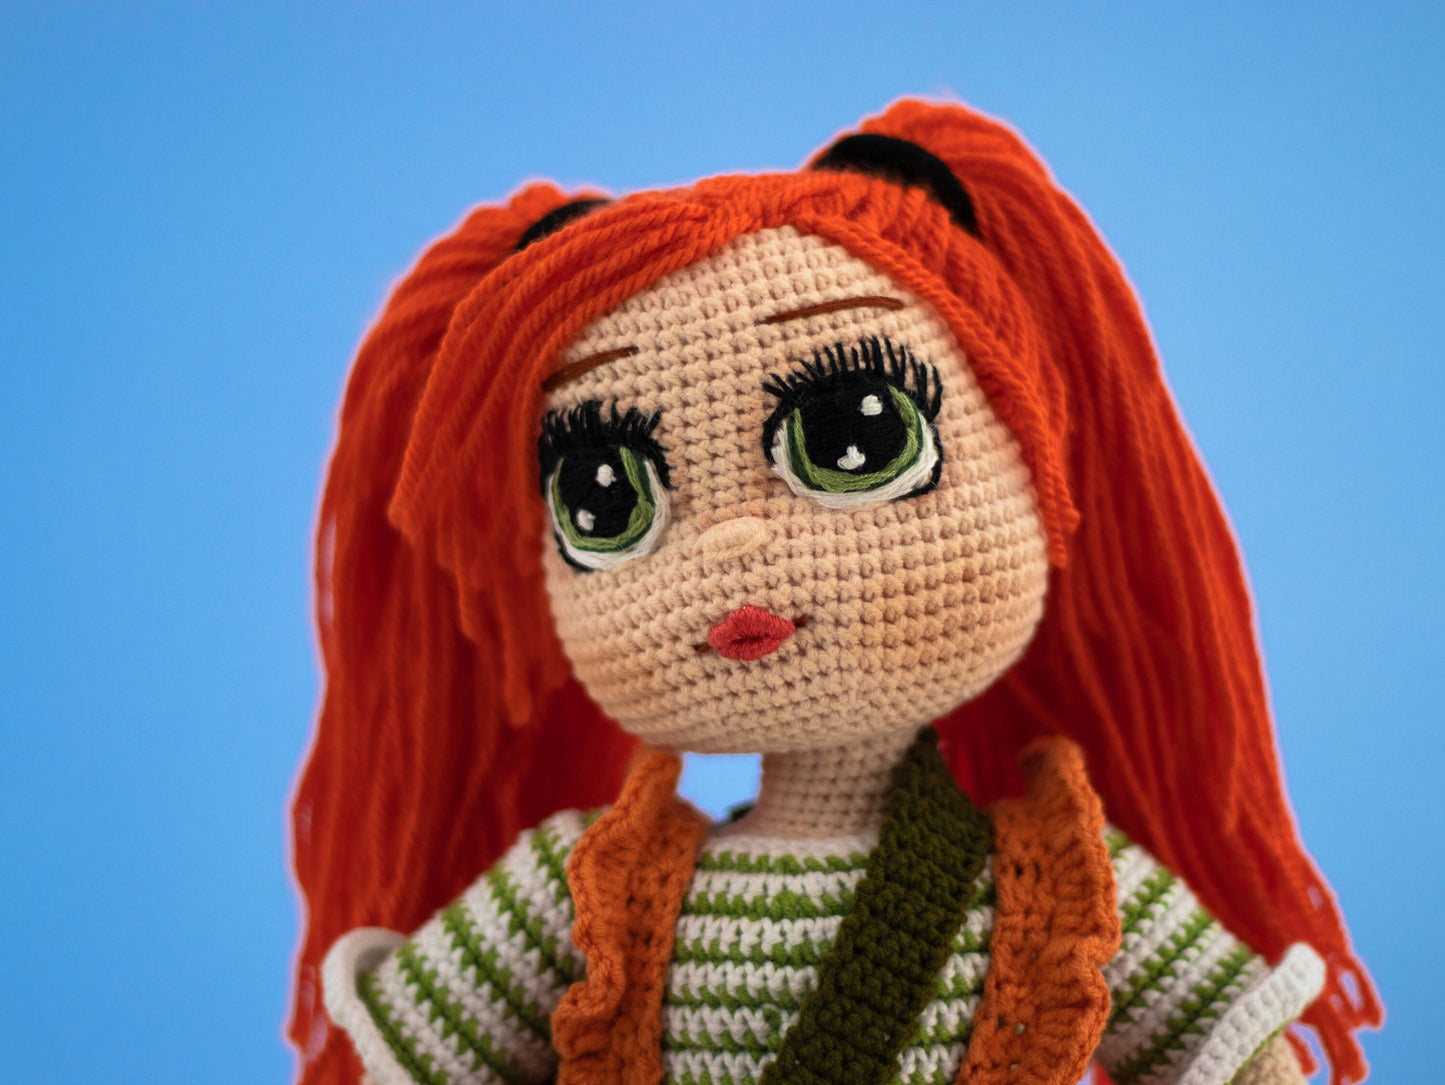 Crochet Doll with Orange Hair, Crochet Doll for Sale, Amigurumi Doll Finished, Knit Doll